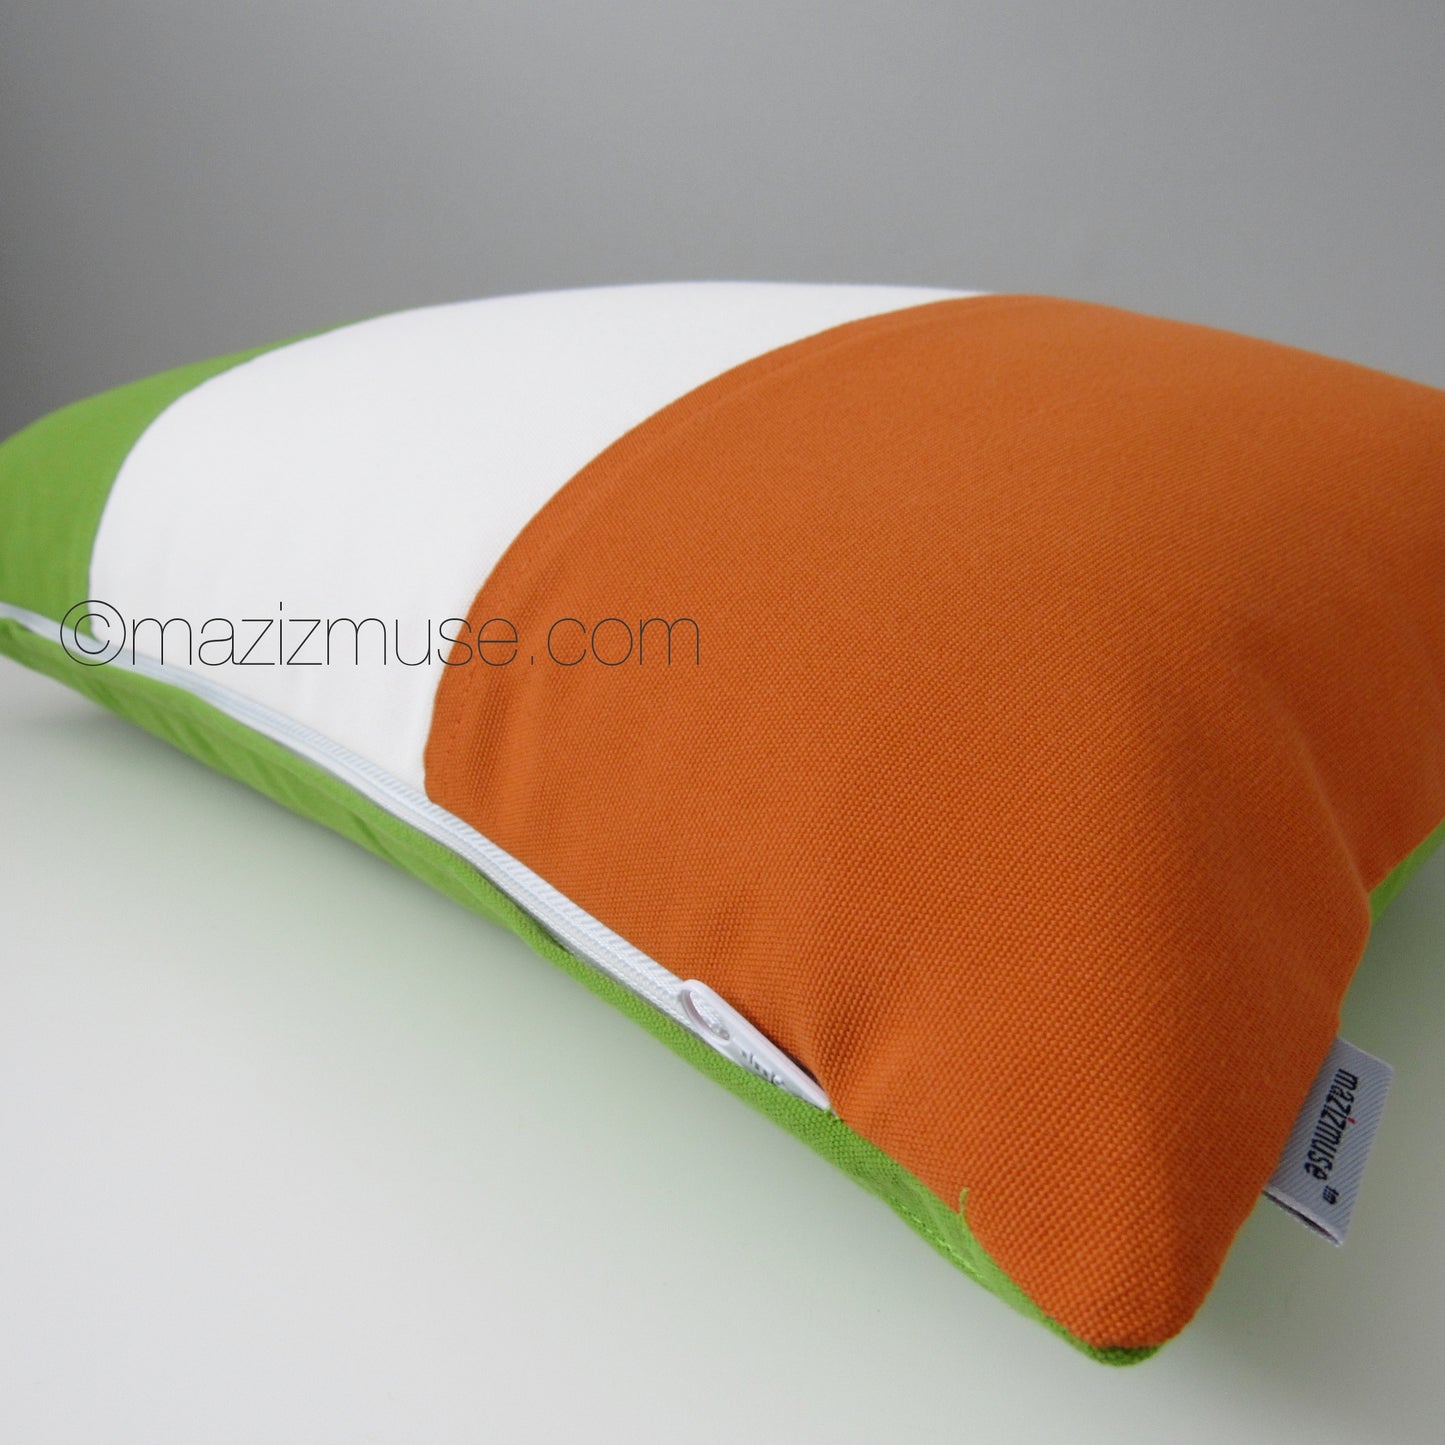 Decorative Ireland Flag Cushion Cover, Irish Flag Sunbrella Pillow Cover